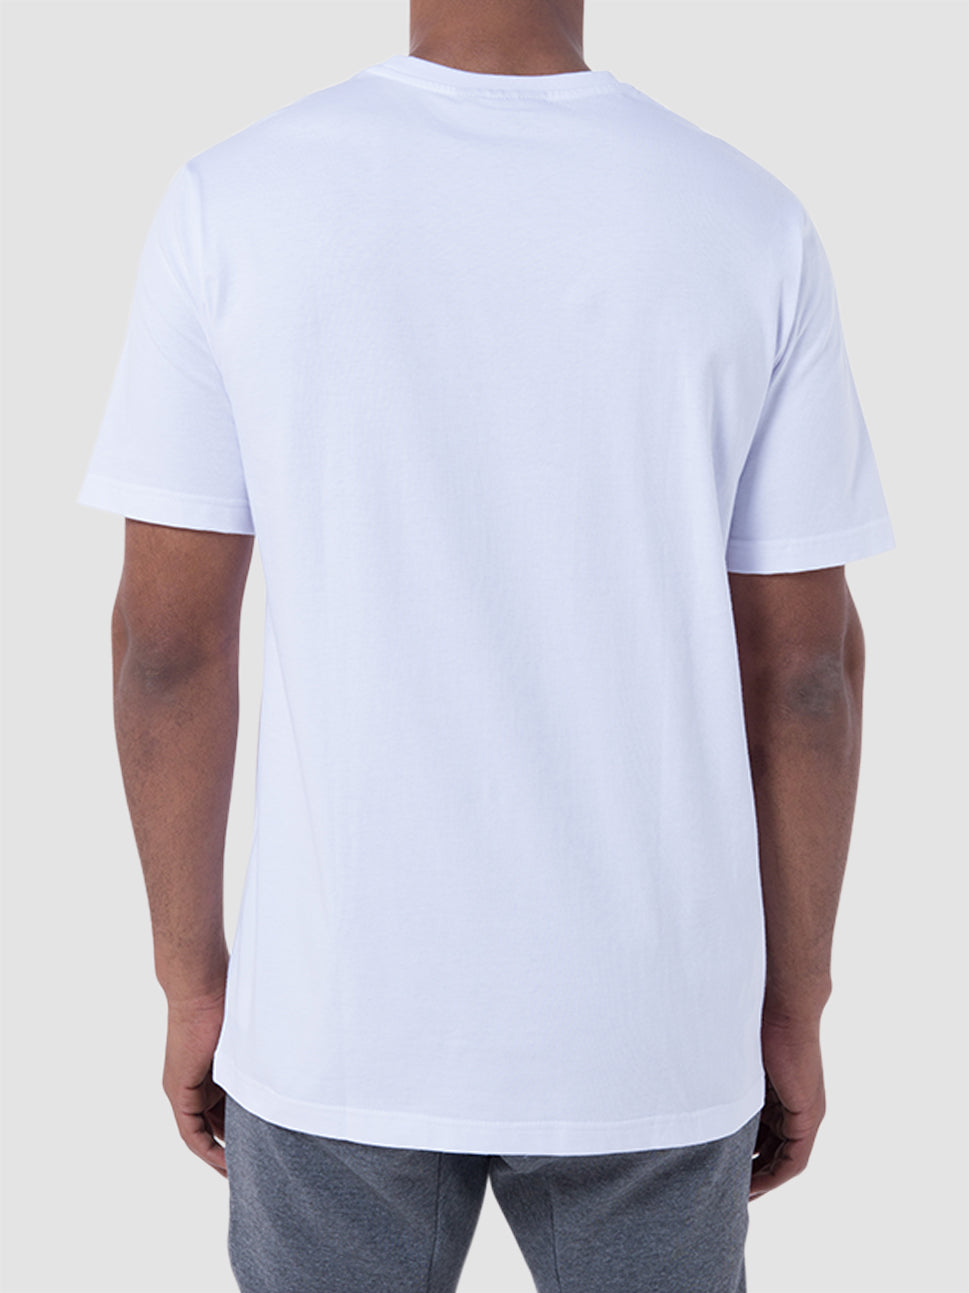 Balr Brand Straight T Shirt Bright White B1112.1048